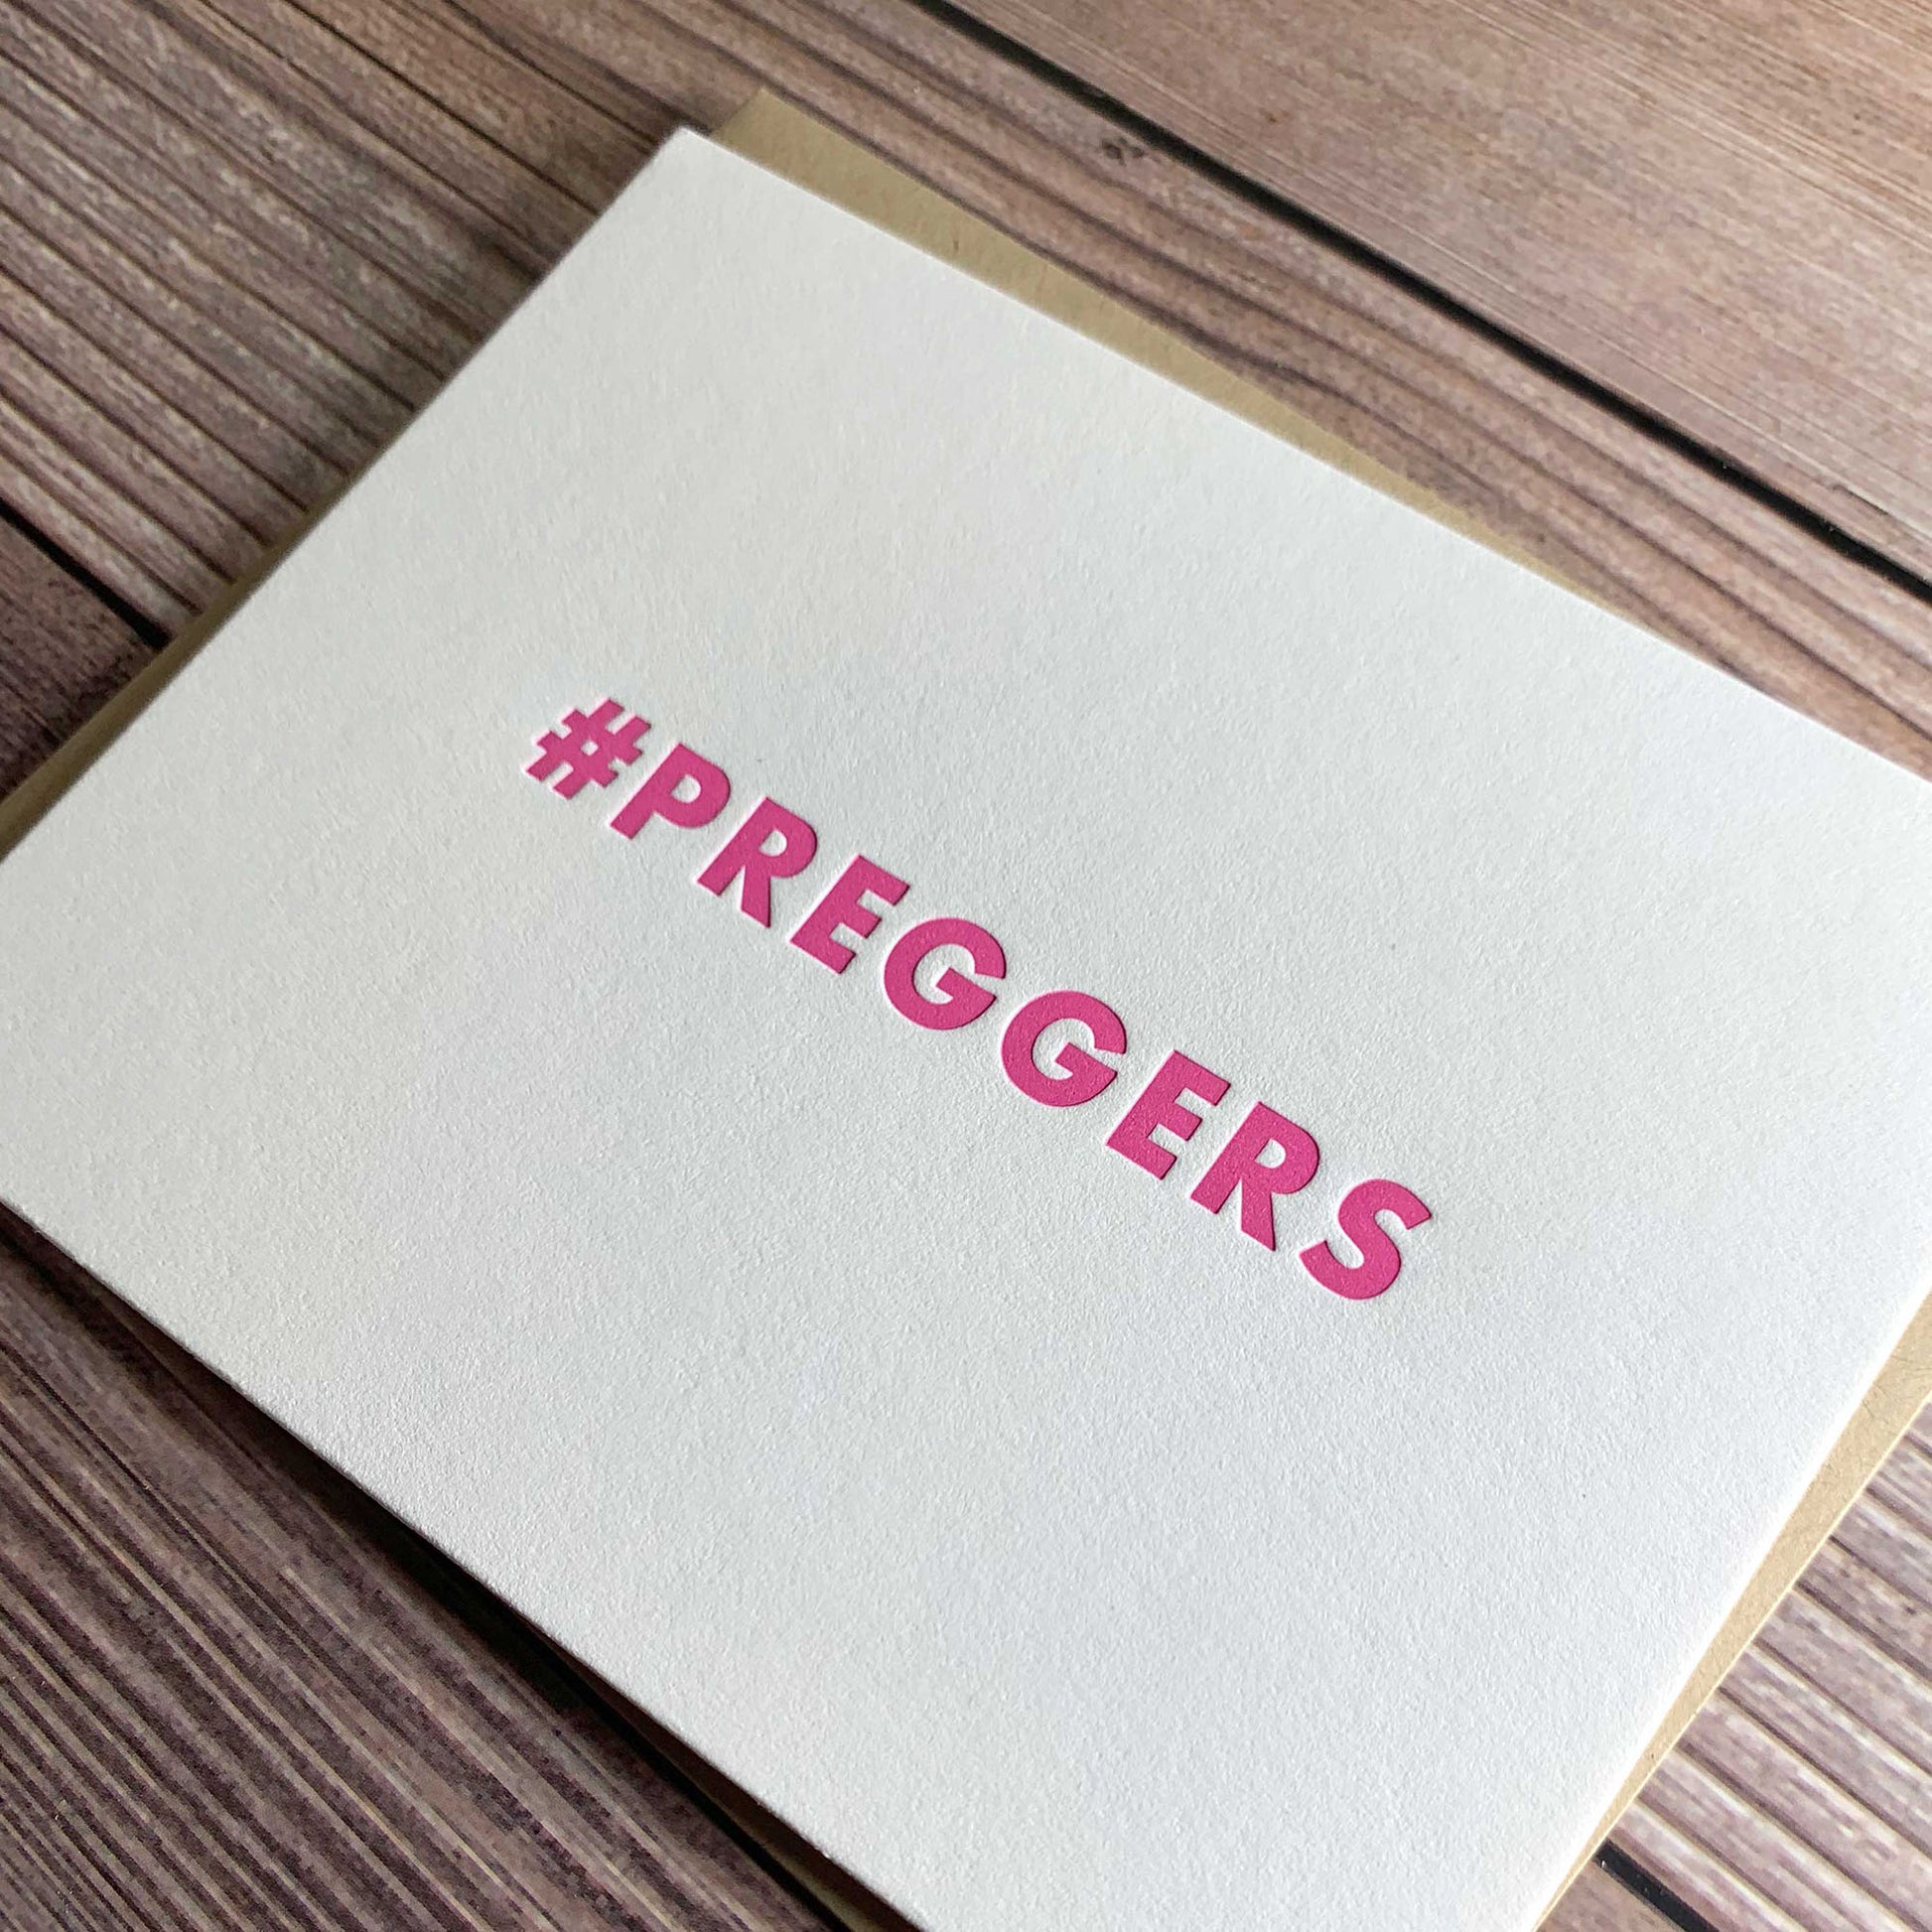 Preggers, expecting parents Card, pregnancy congratulations, Letterpress printed, view shows letterpress impression, includes envelope